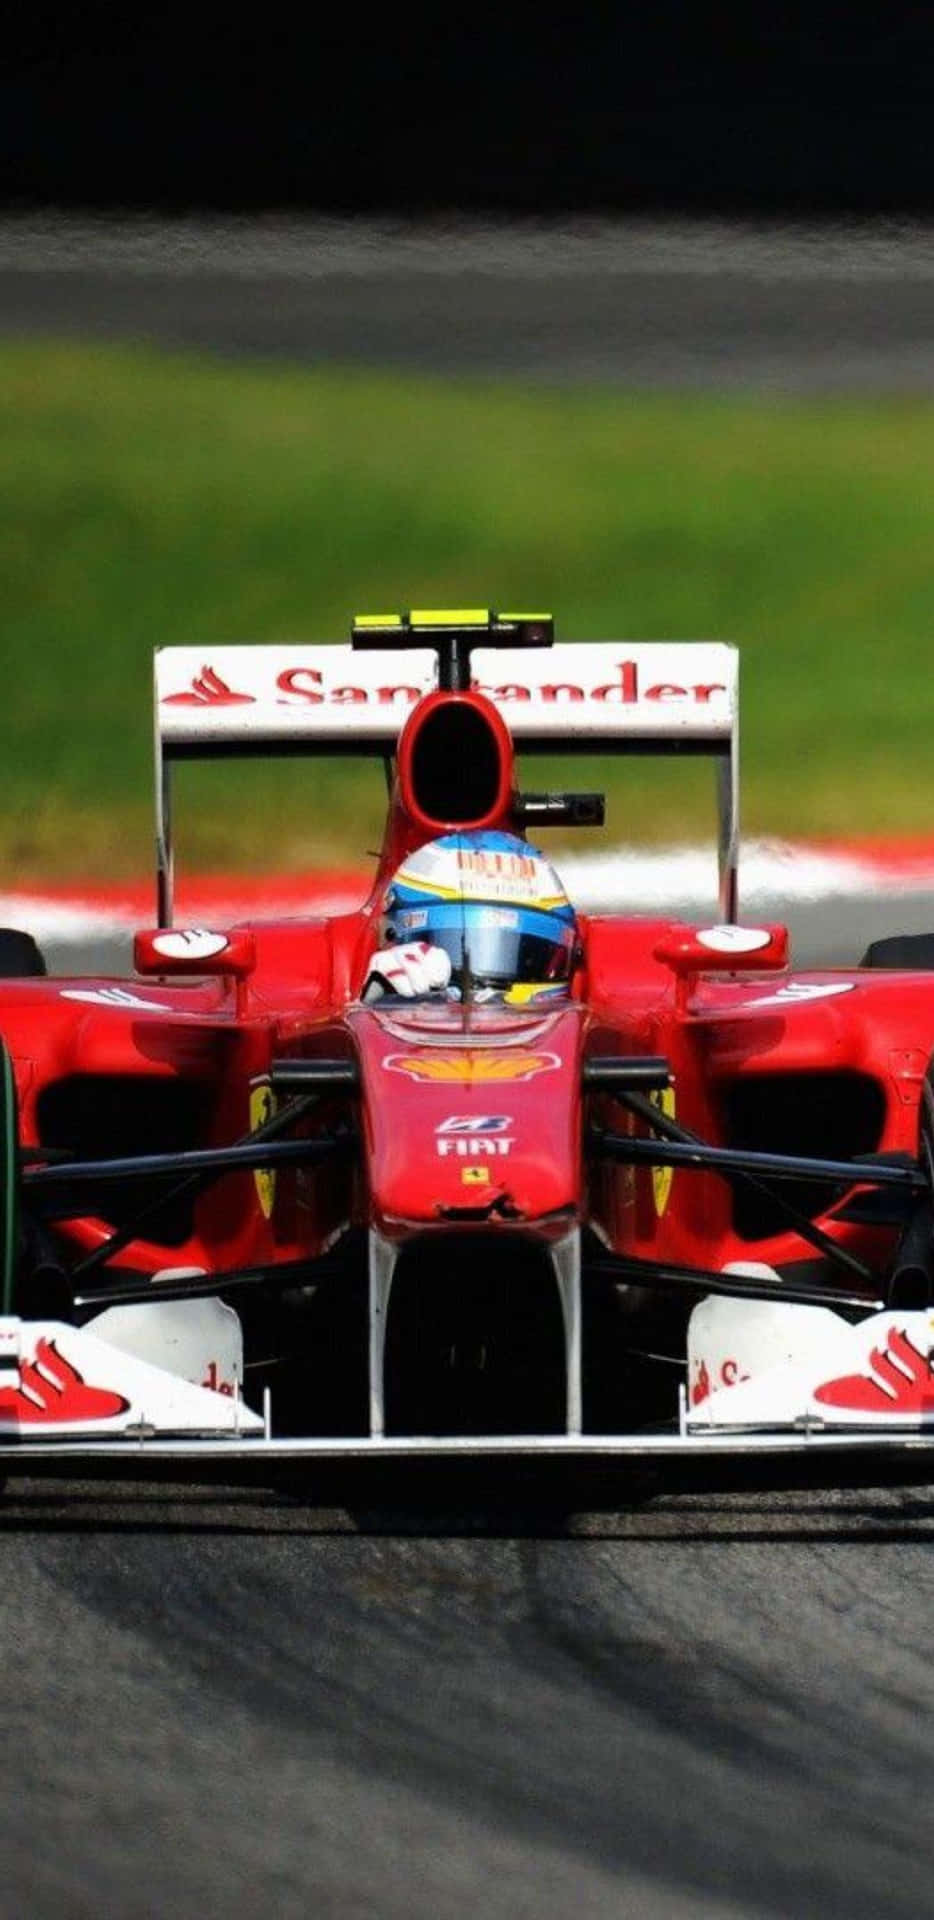 Ferrariinternational Racing Car Pixel 3xl F1 2018 Hintergrund